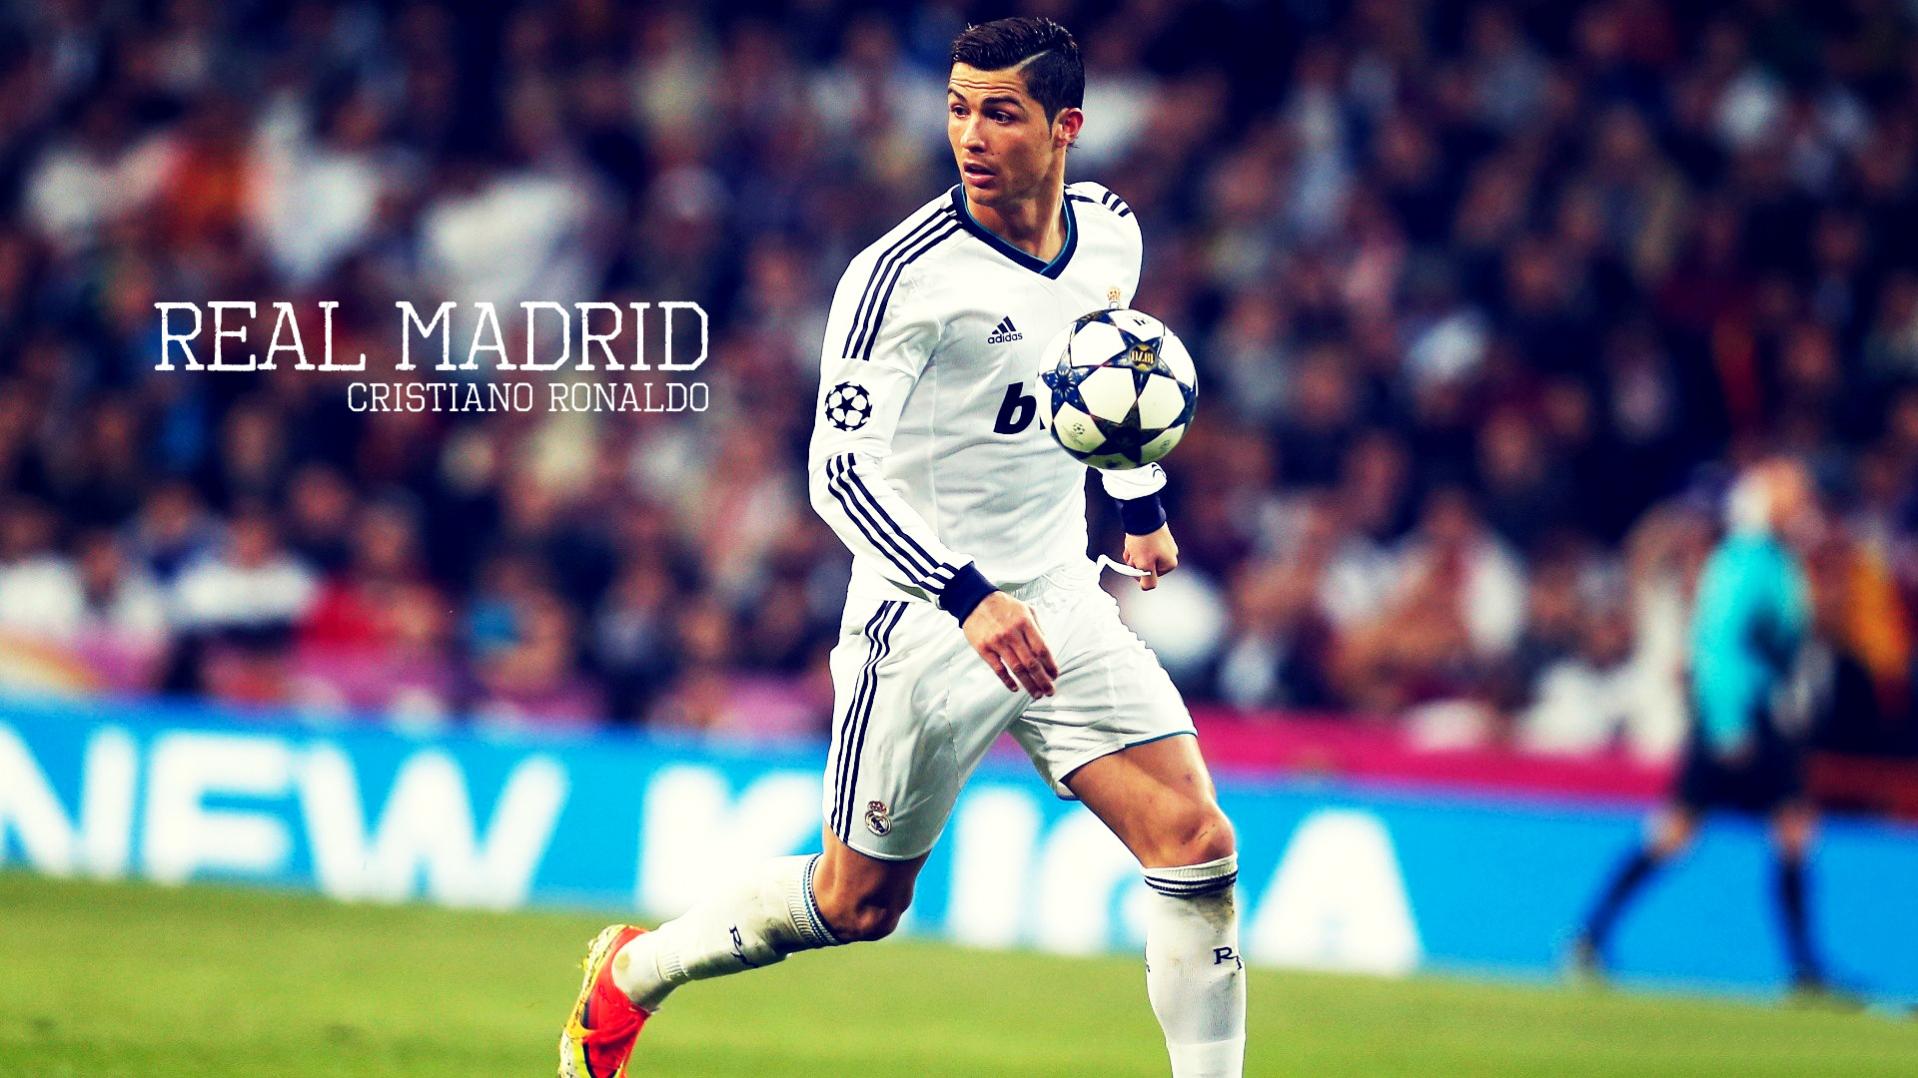 HD Cristiano Ronaldo Real Madrid 2014